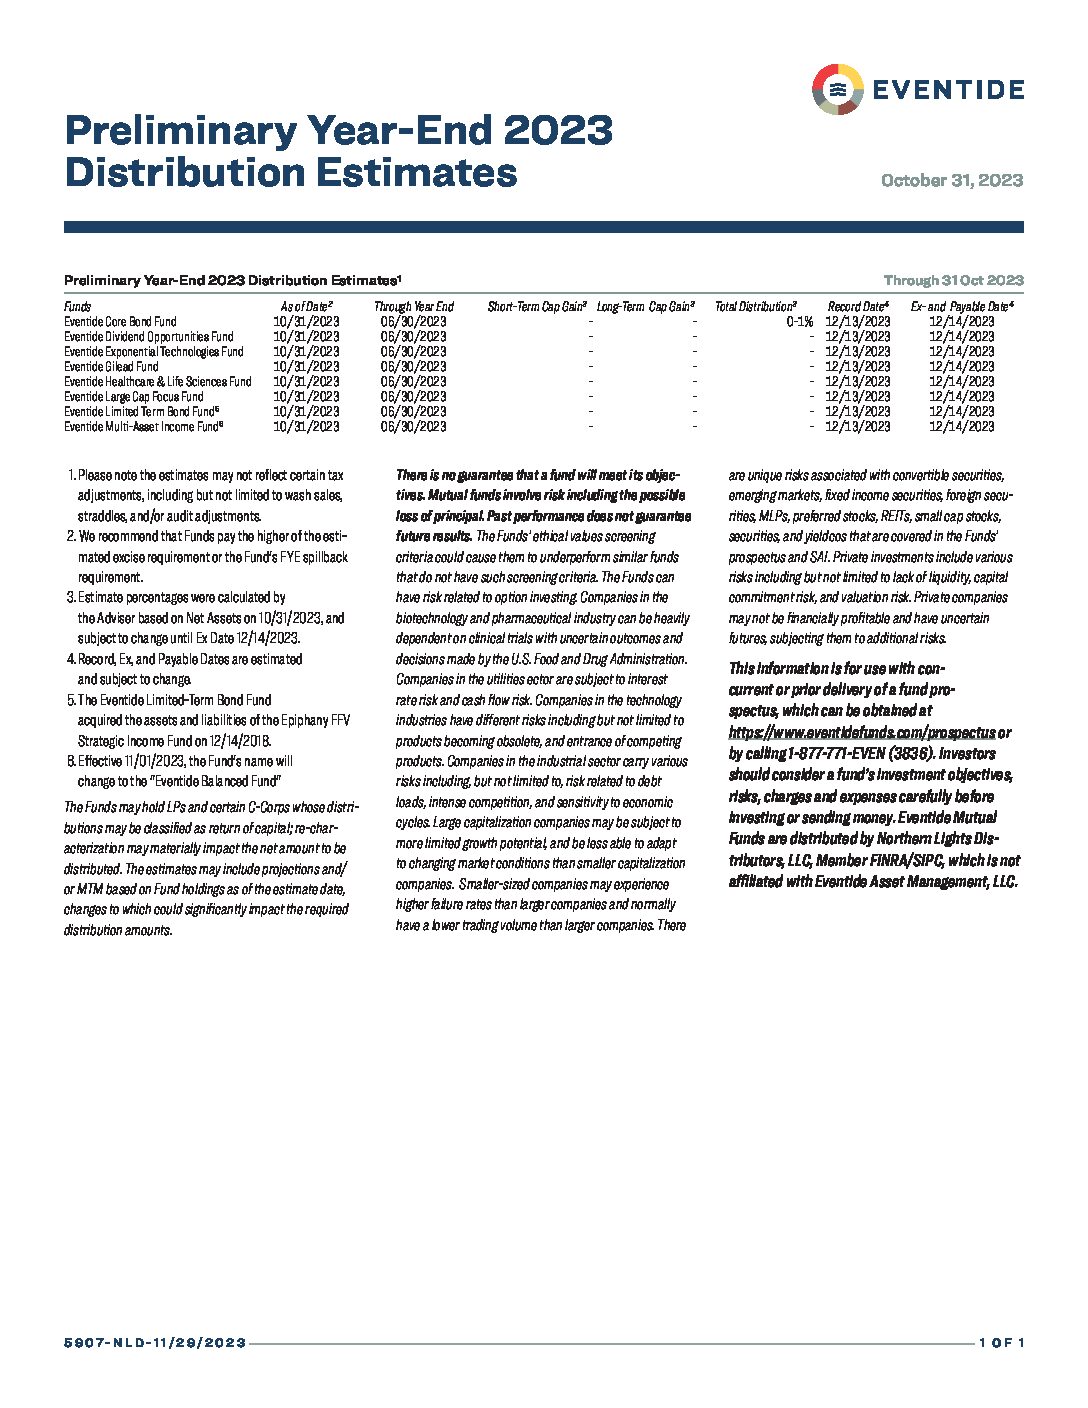 Preliminary Year-End Distribution Estimate (10/31/2023)